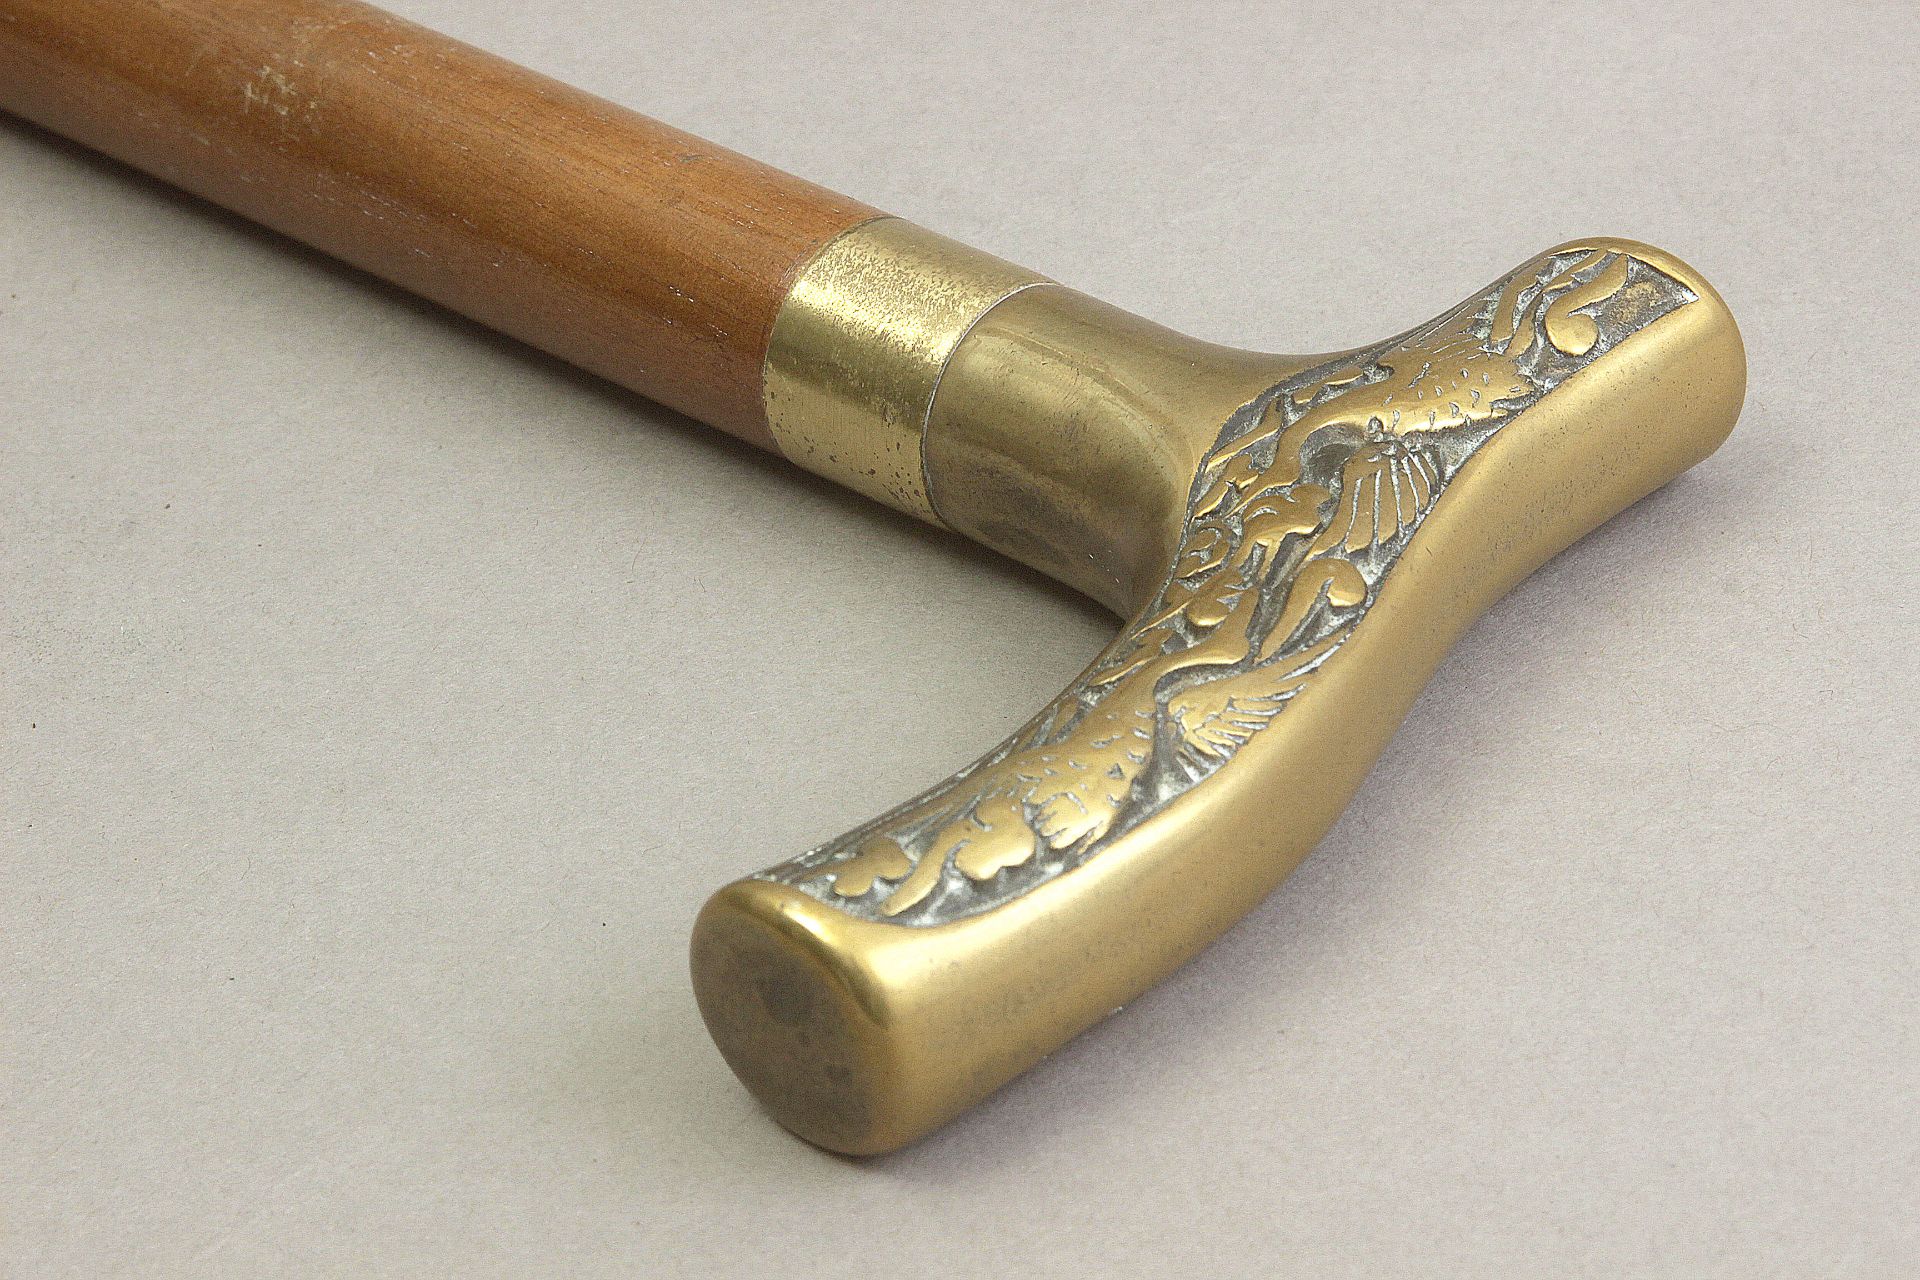 A 20th century walking stick.